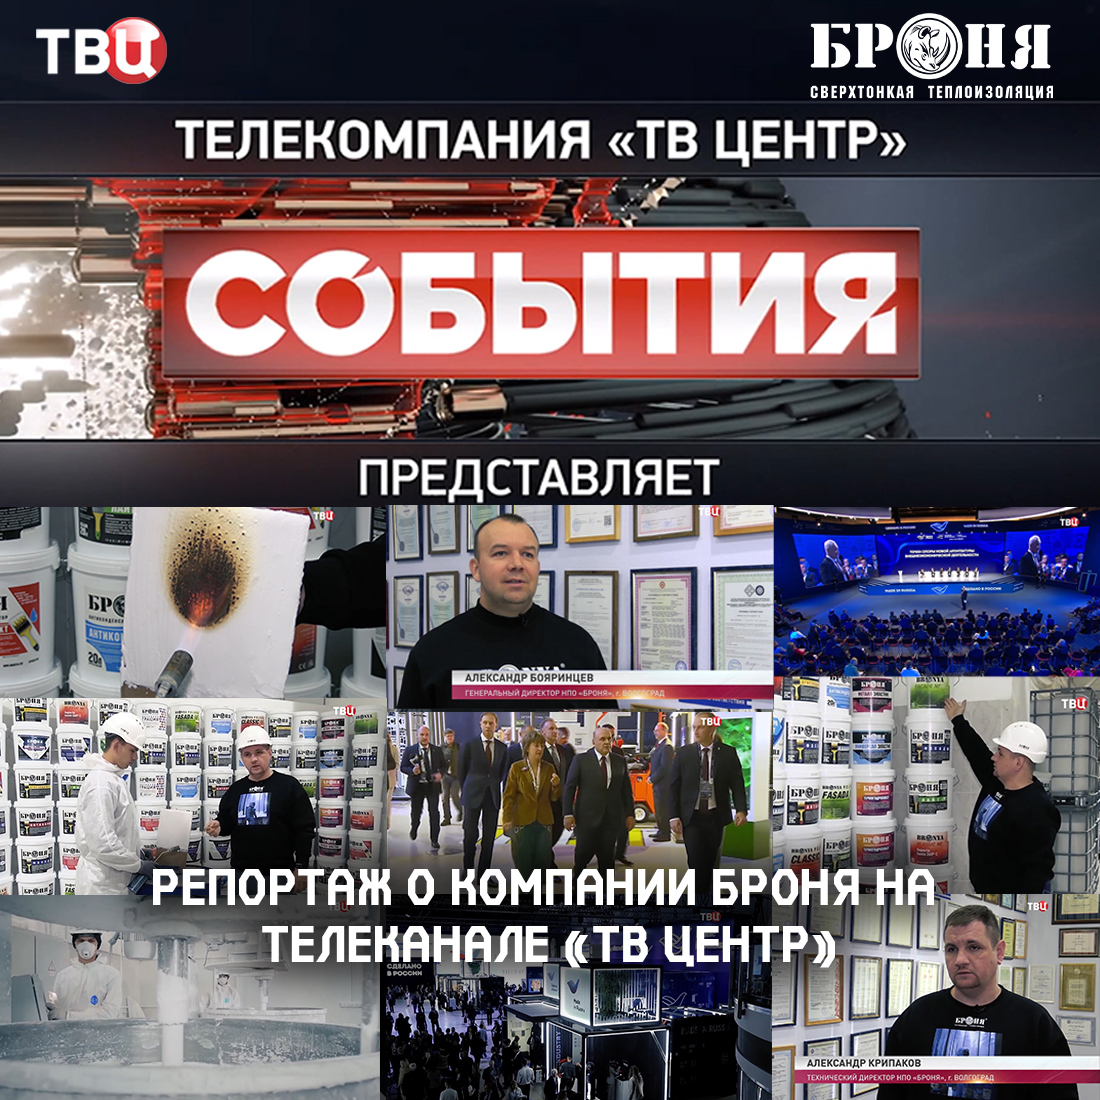 Репортаж о компании Броня на телеканале "ТВ Центр"